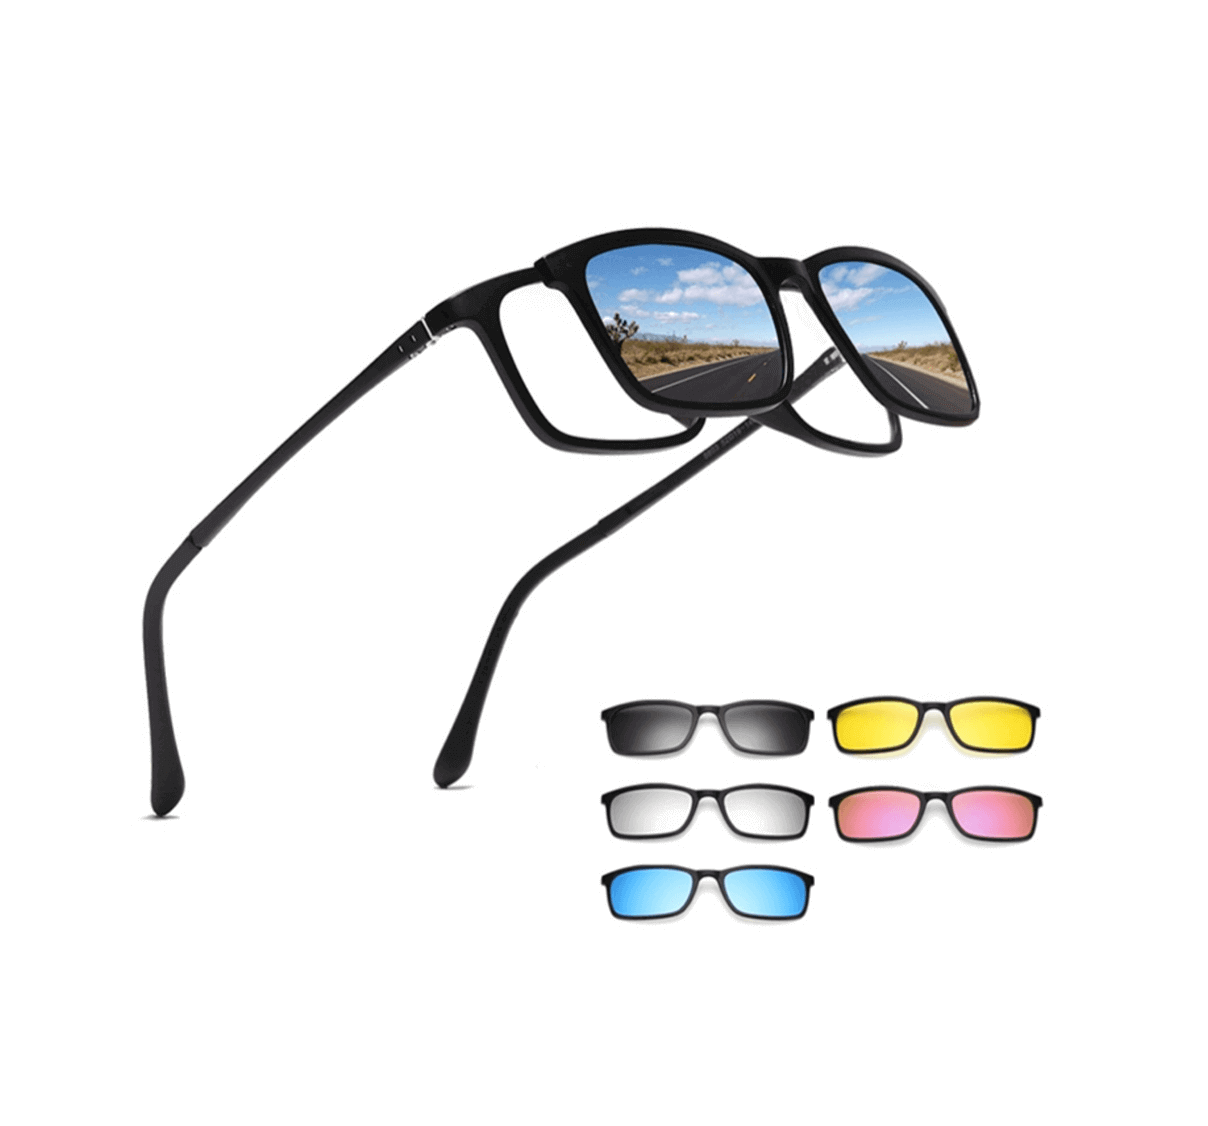 buy wholesale designer sunglasses, wholesale clip on sunglasses, buy wholesale sunglasses, china wholesale sunglasses designer, China sunglasses factory, sunglasses supplier